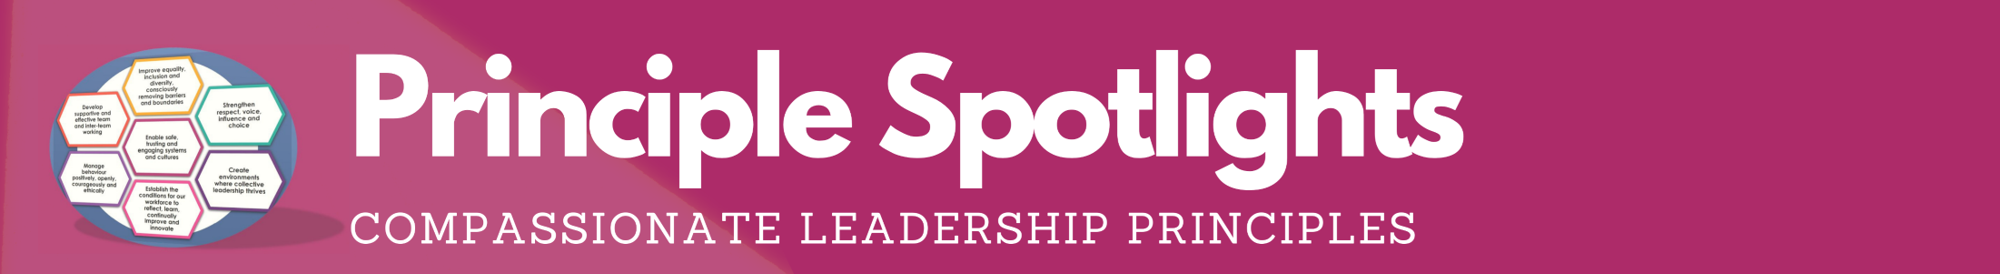 Principle Spotlights, Compassionate Leadership Principles